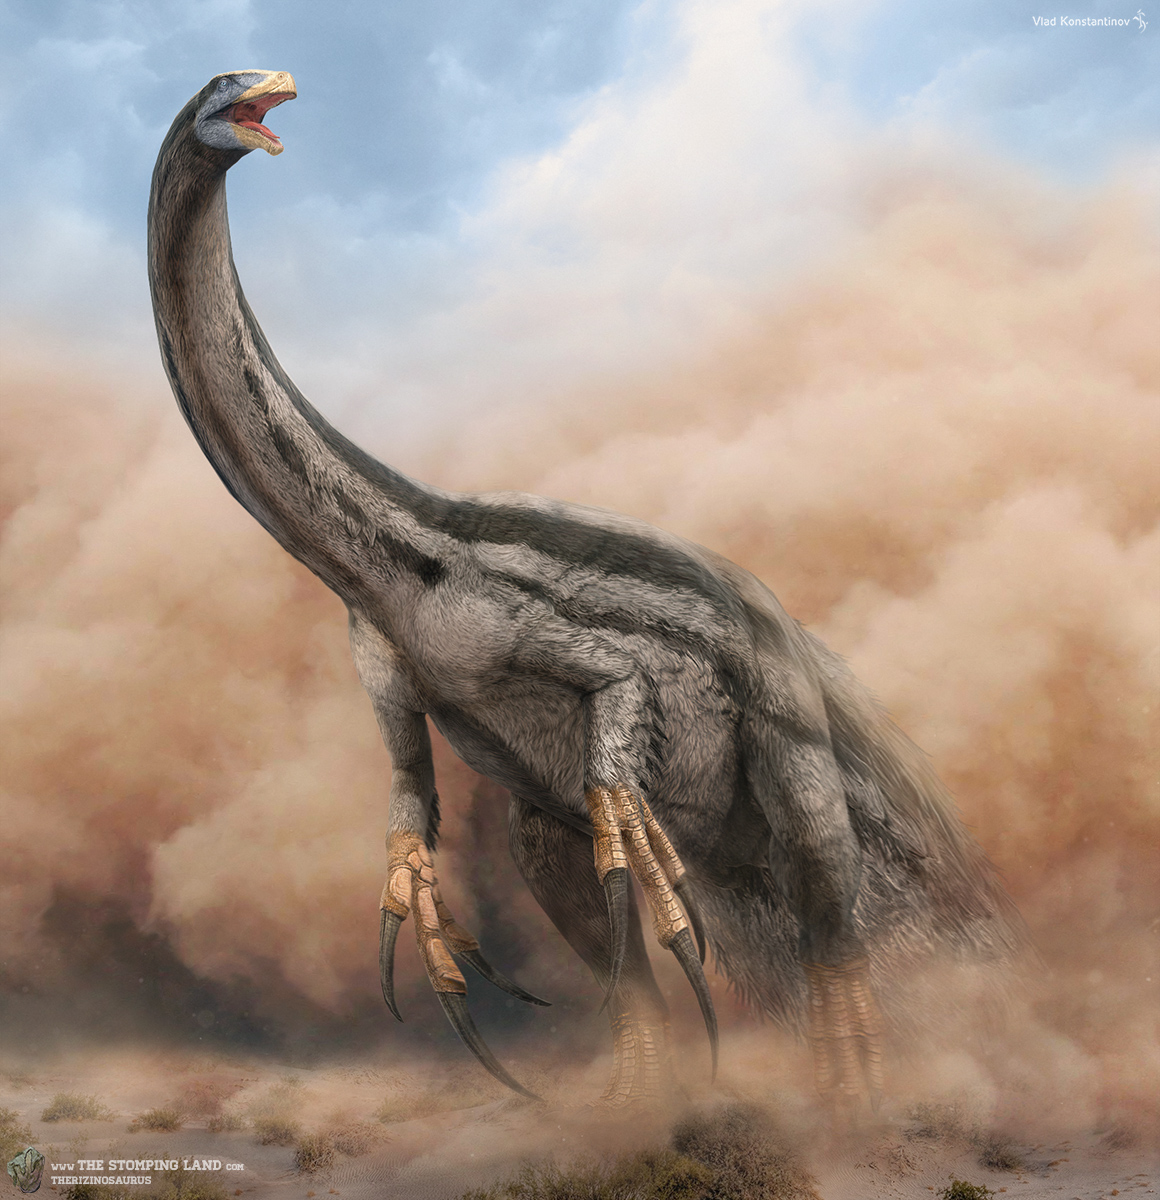 General Jurassic World: Fallen Kingdom News Thread V.2 - Page 13 Latest?cb=20151130183219